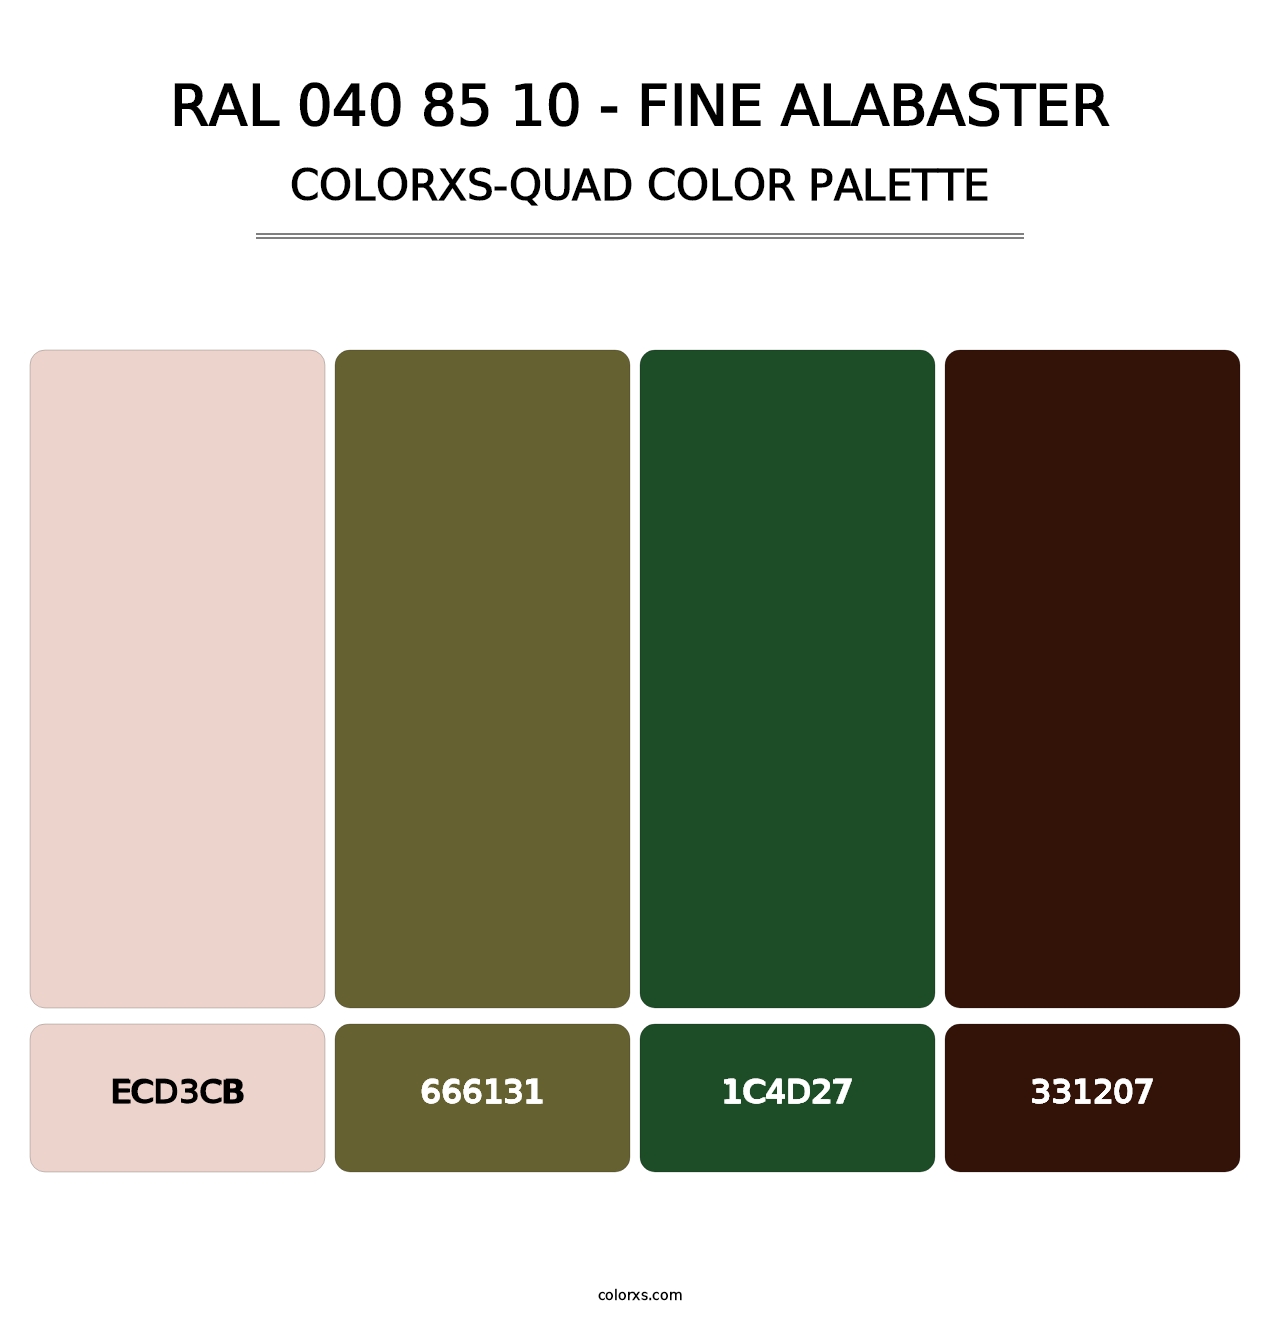 RAL 040 85 10 - Fine Alabaster - Colorxs Quad Palette